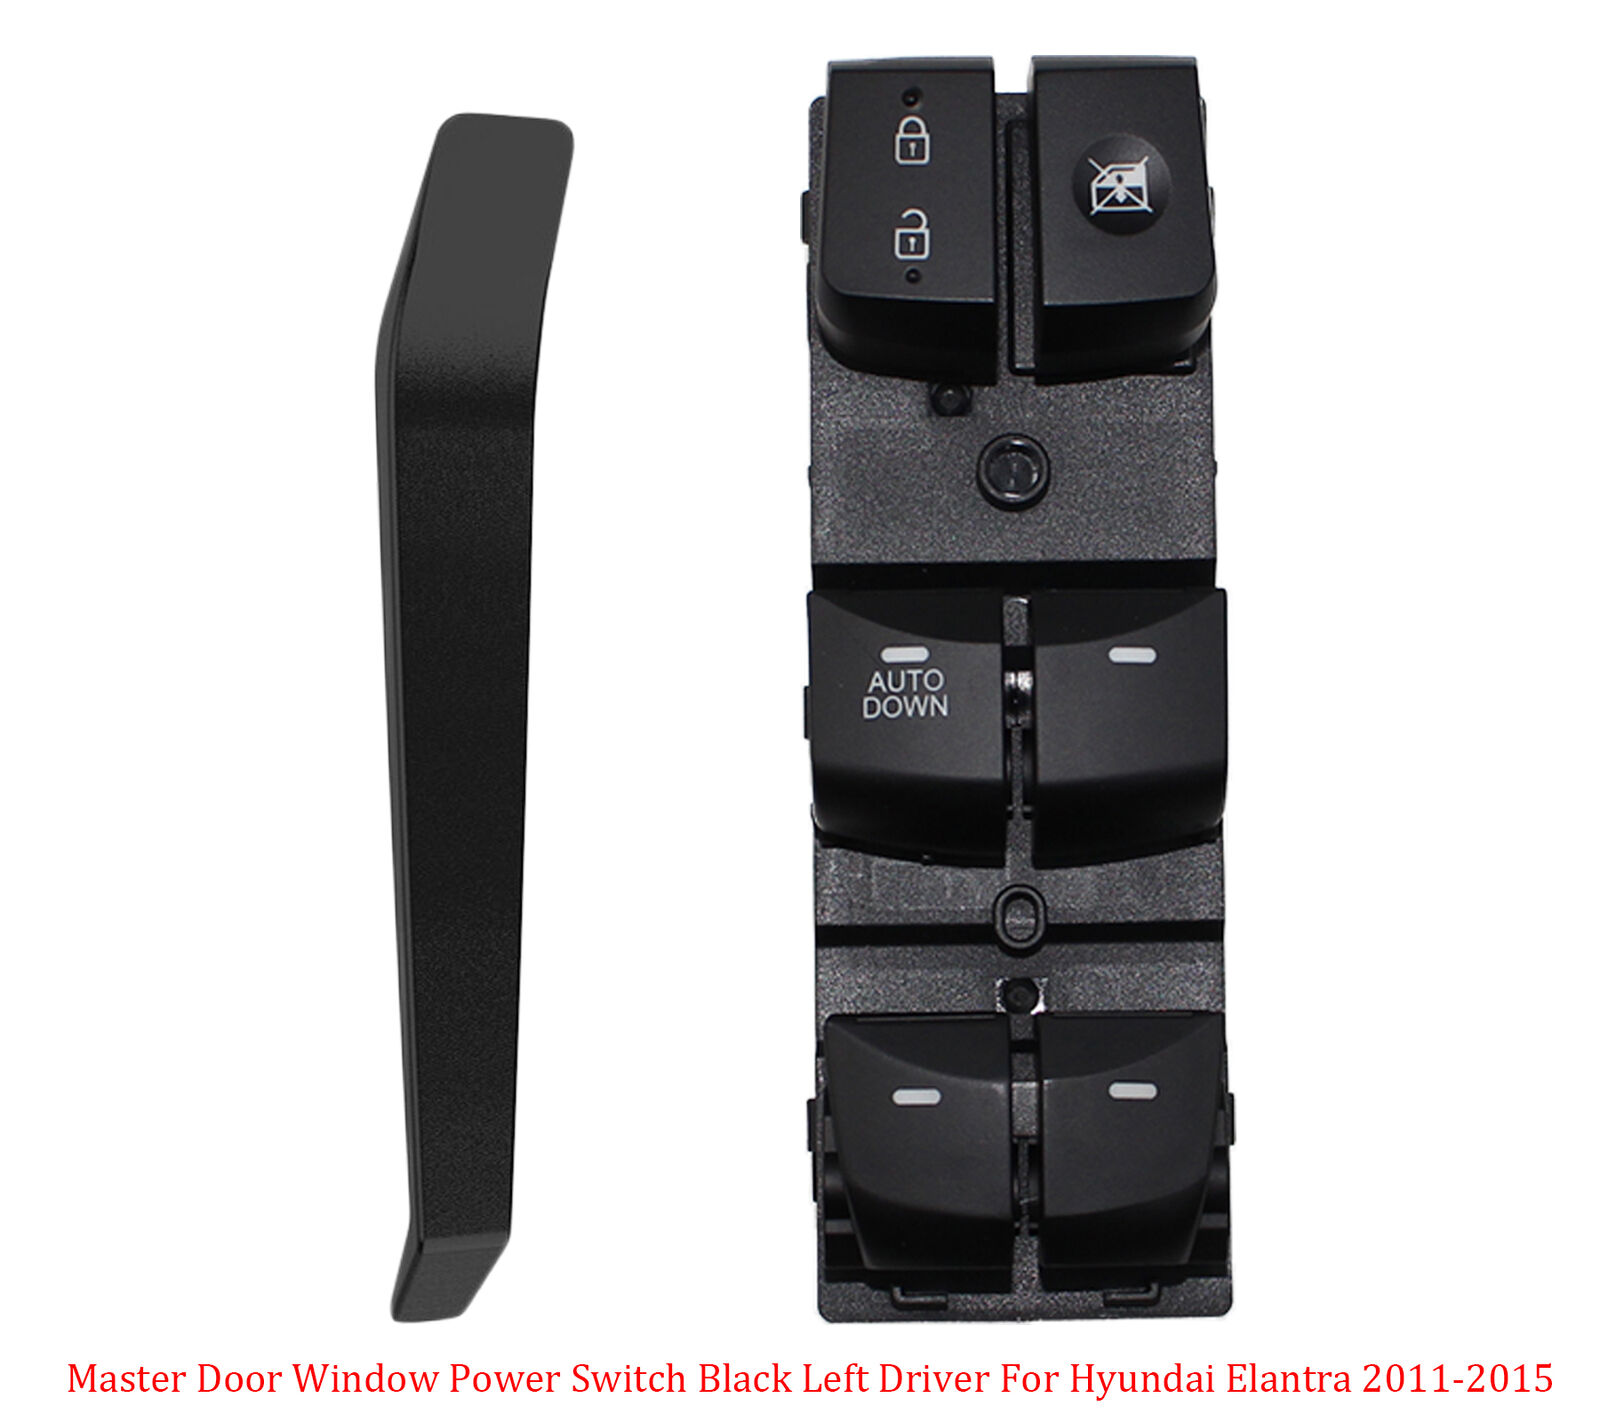 Power Window Switch Master Door Black Left Driver For Hyundai Elantra 2011-2015